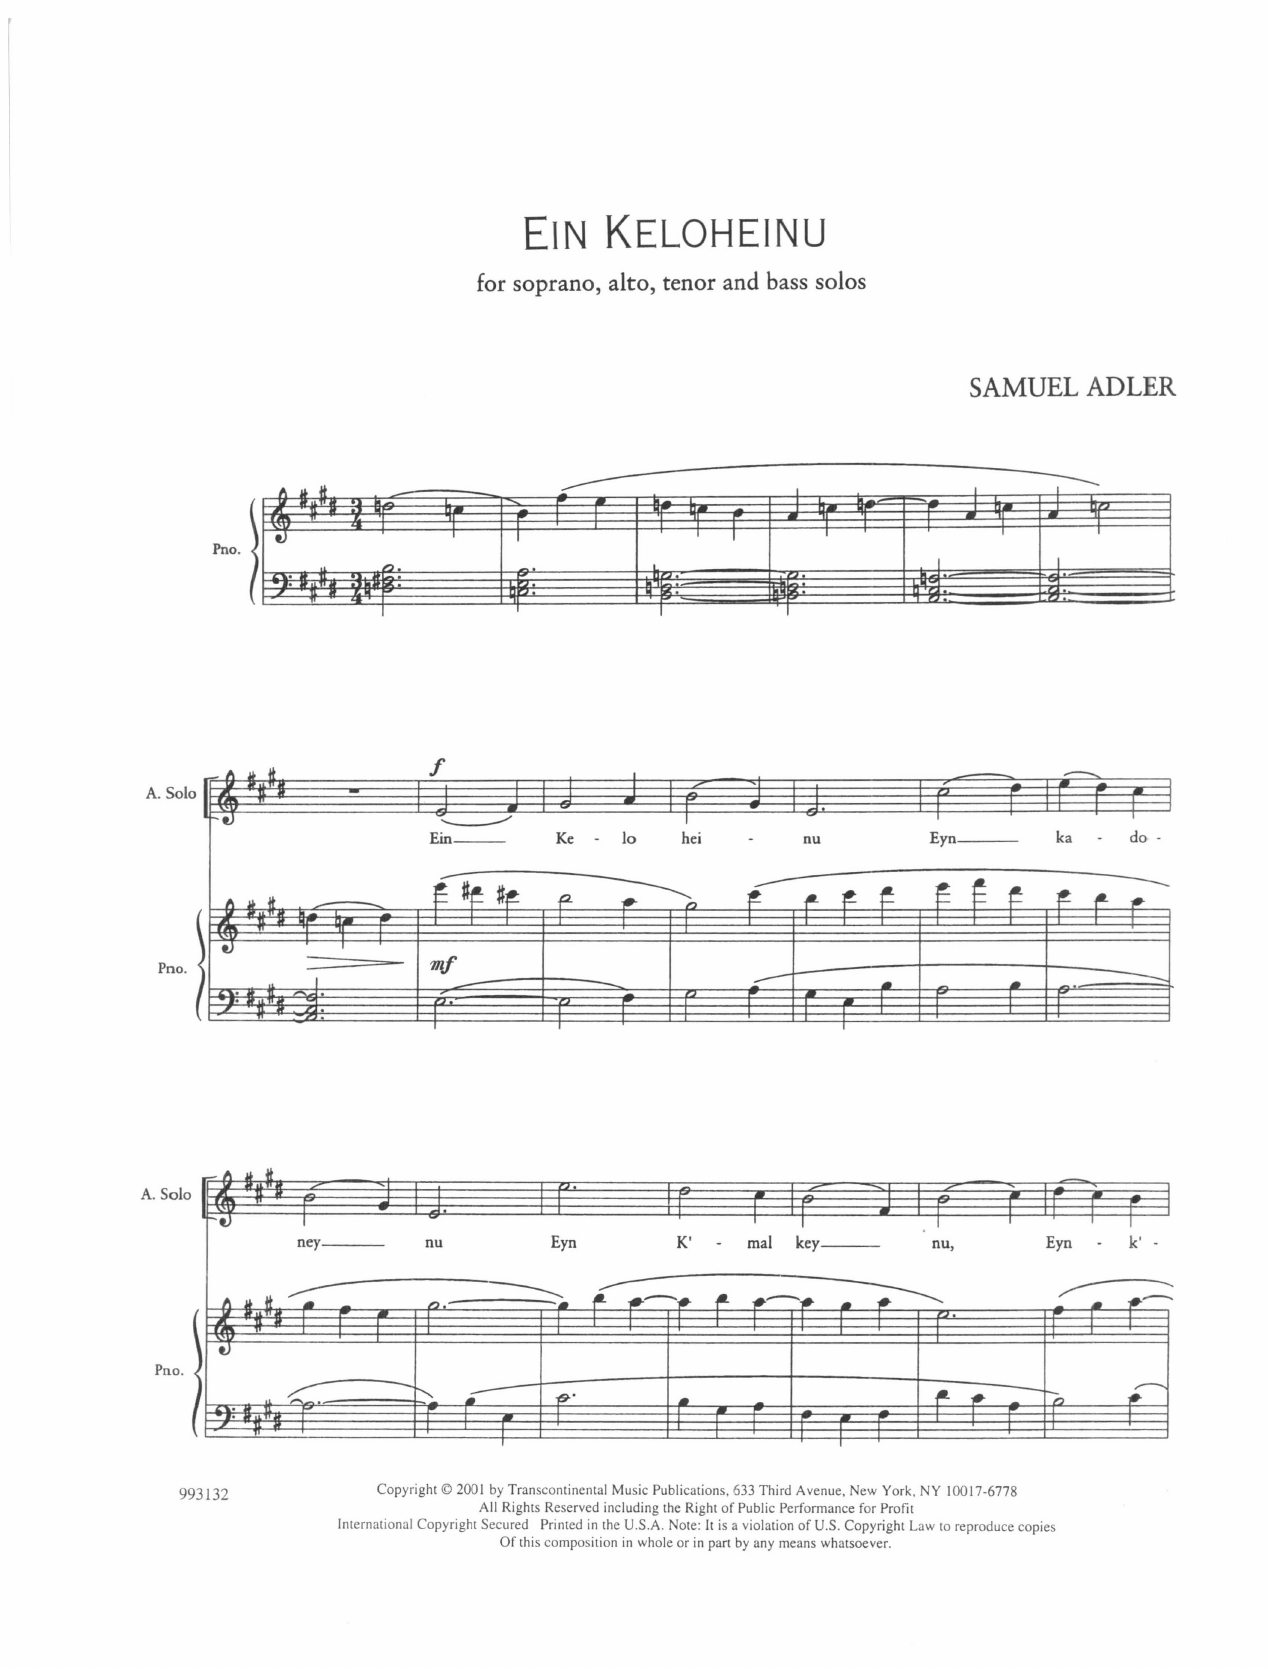 Download Samuel Adler Five Sephardic Choruses: Ein Keloheinu Sheet Music